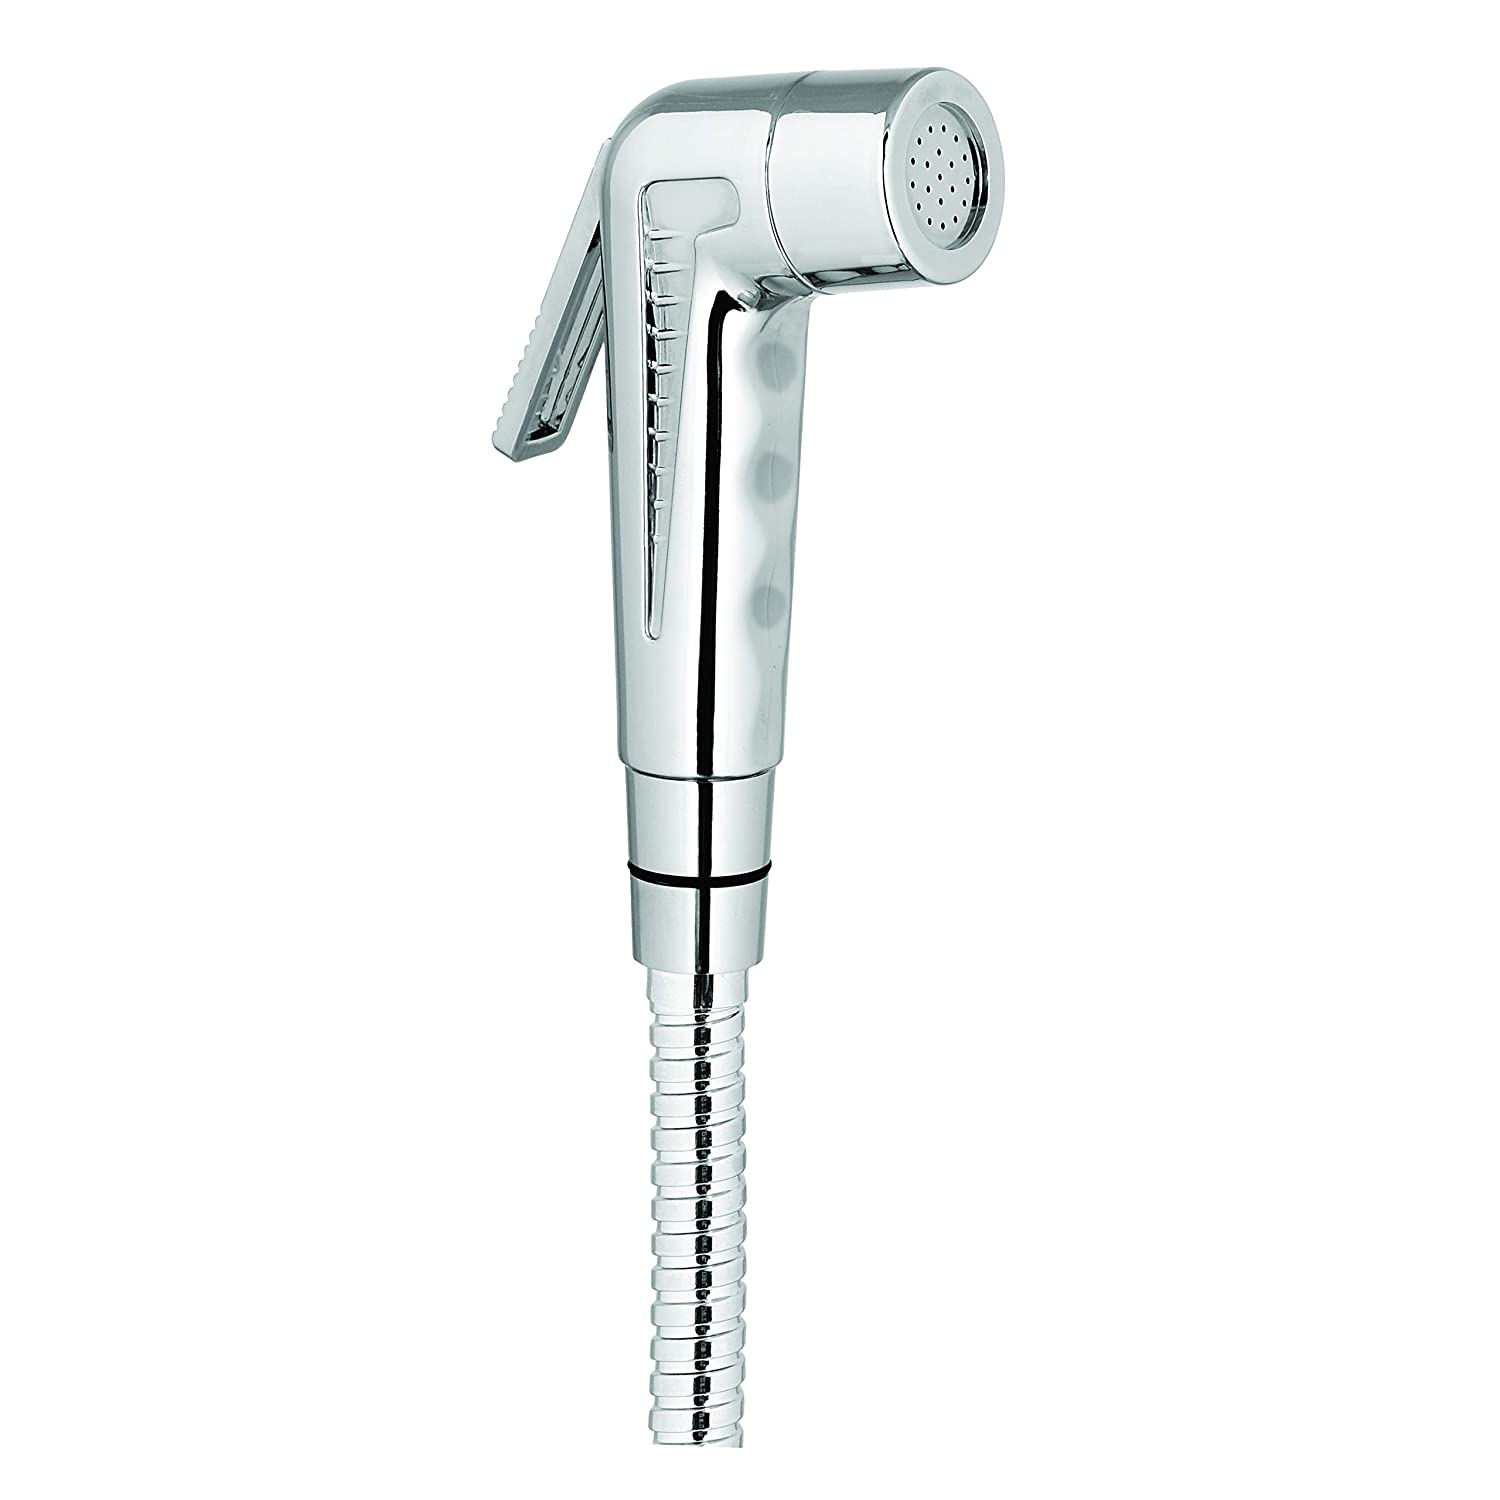 Parryware Splash Health Faucet T9805A1 for Bathroom Fittings